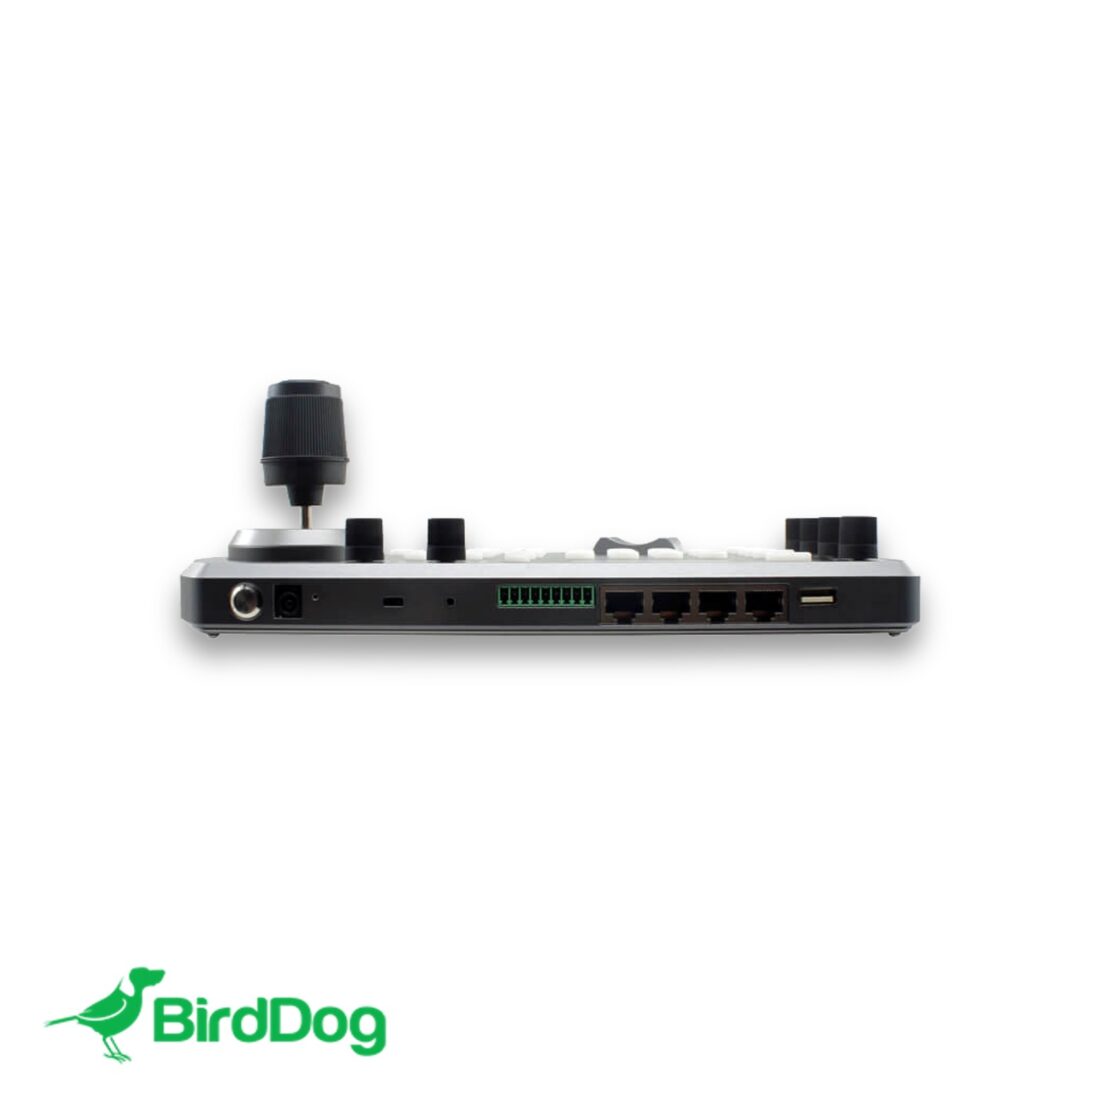 BirdDog camera controller